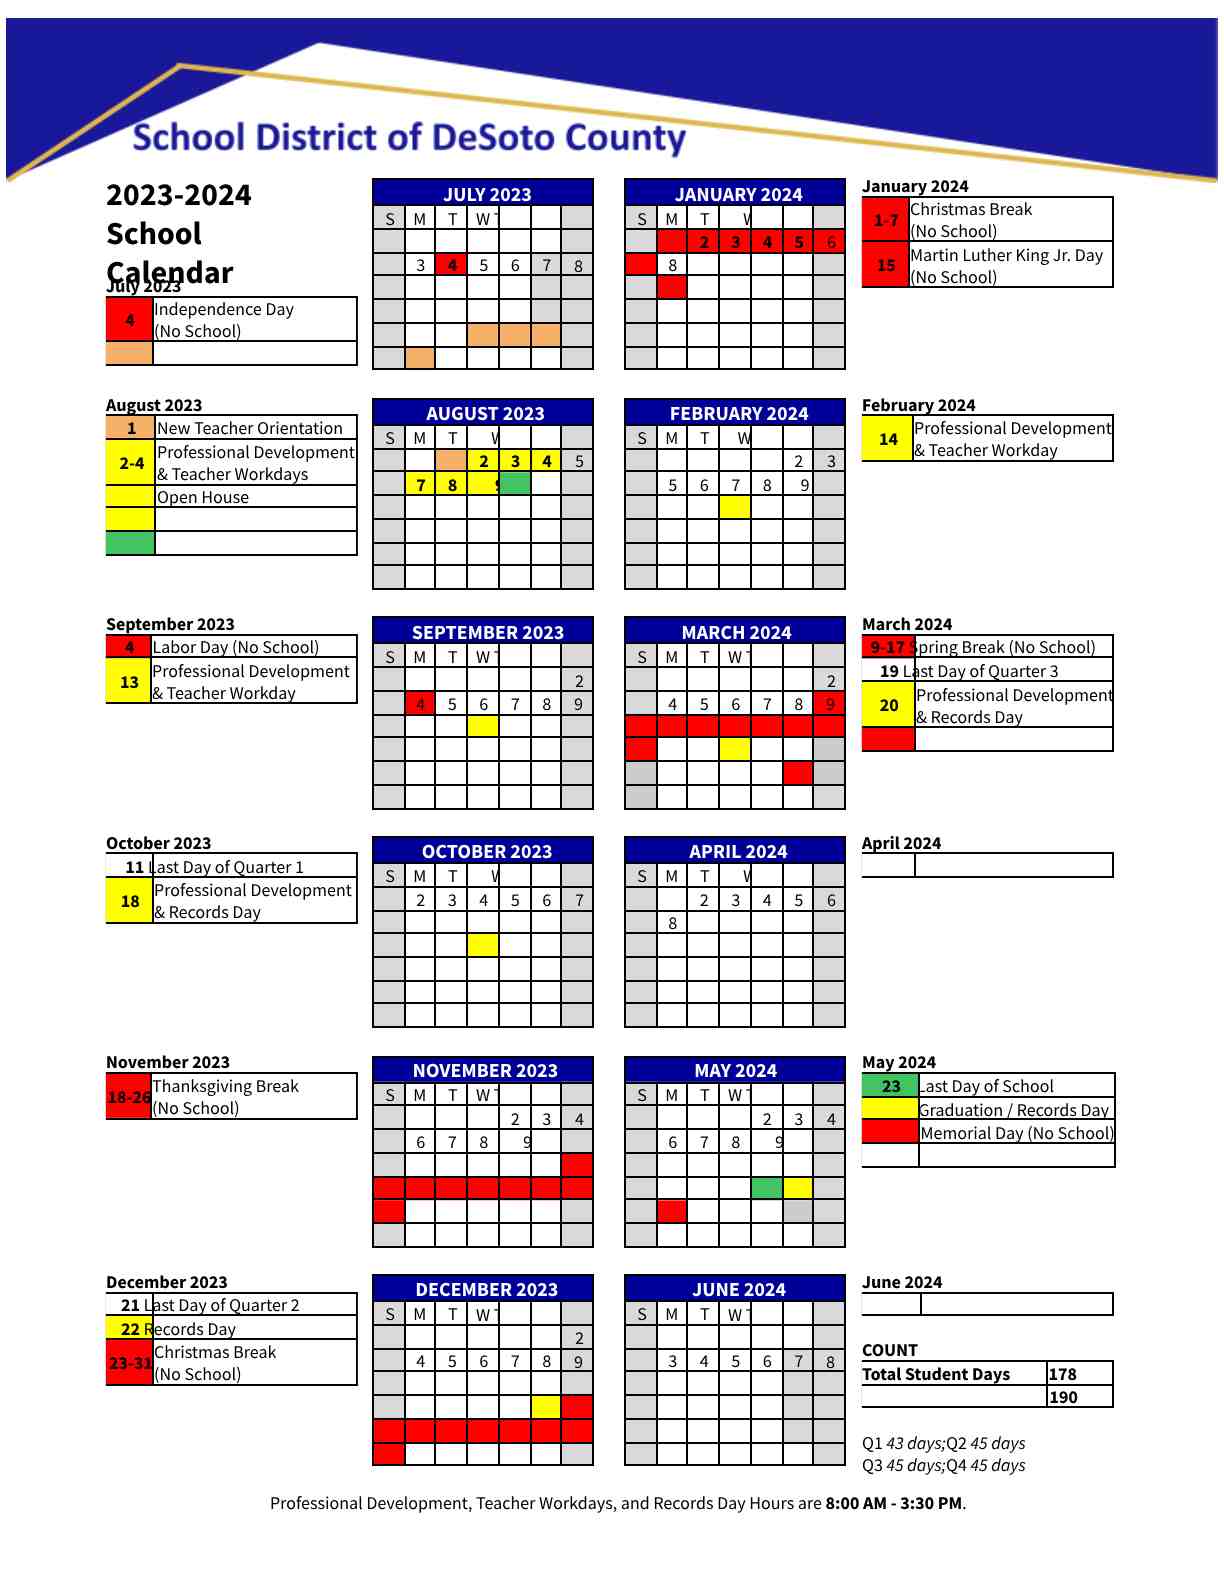 DeSoto County School District Calendar 2023 and 2024